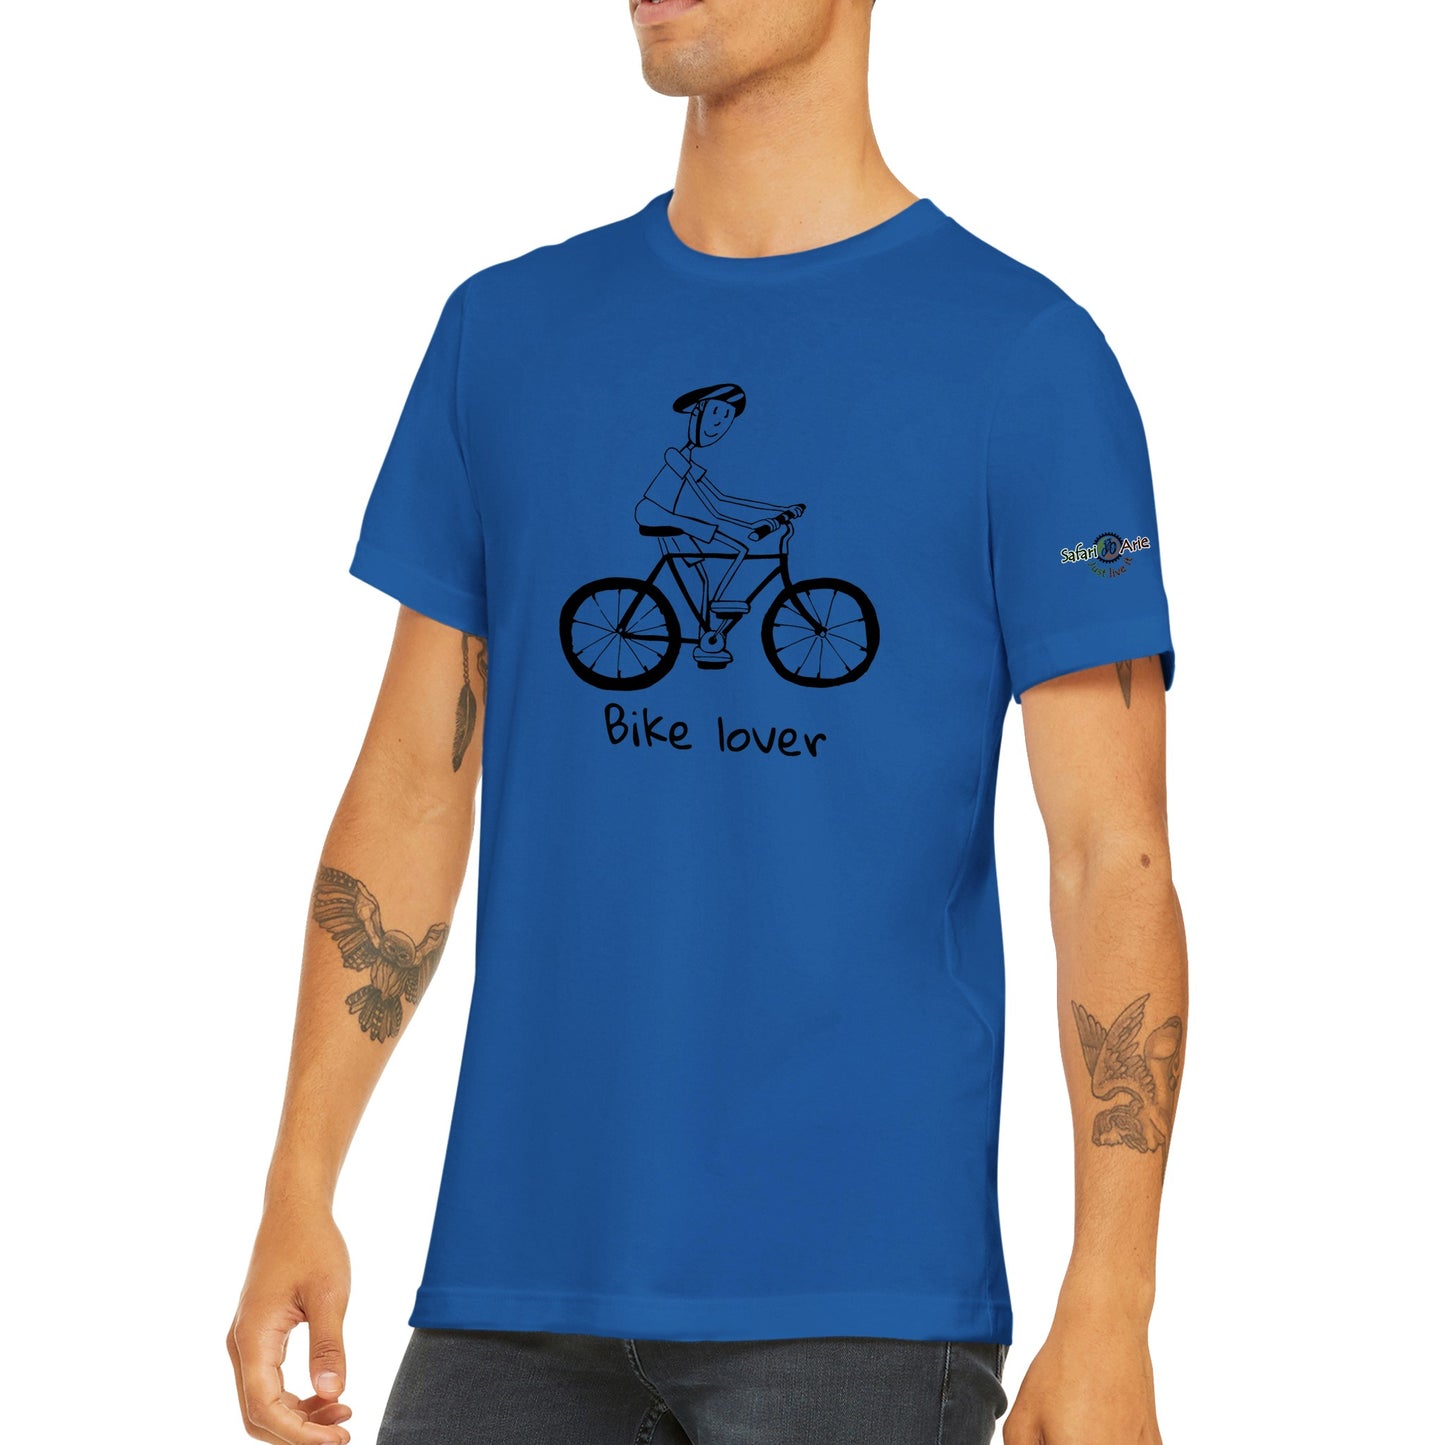 Bike lover mens cartoon t-shirt